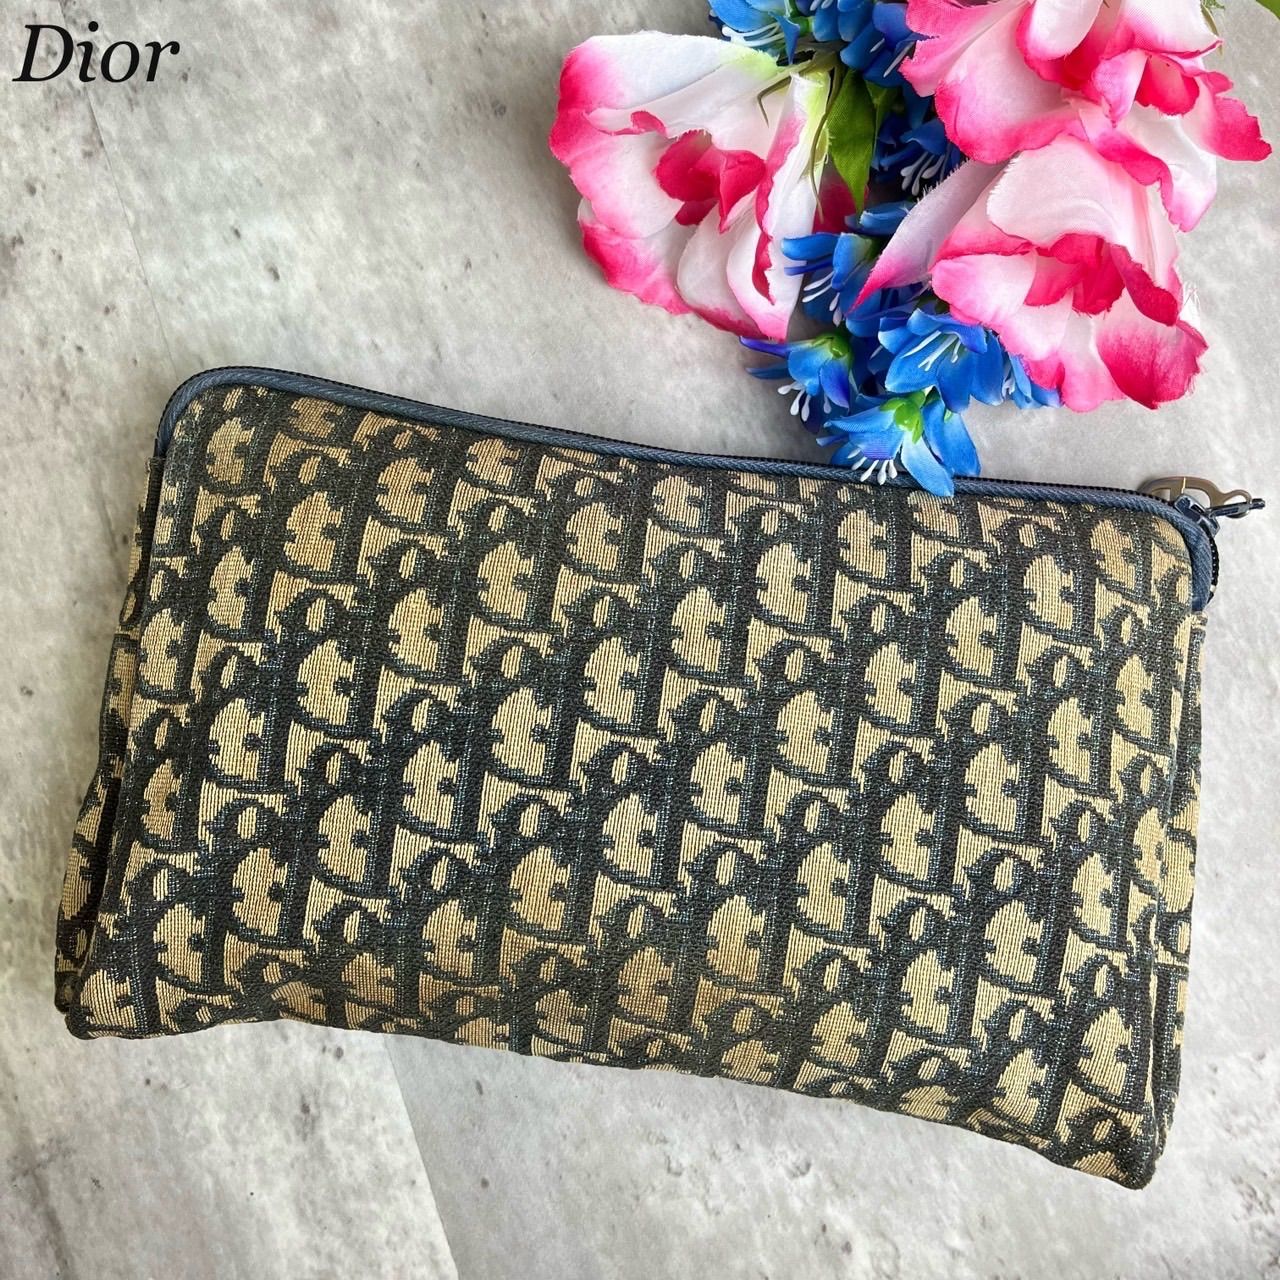 Dior ディオール クラッチバッグ 紺色 ヴィンテージ ゴールド金具 - バッグ